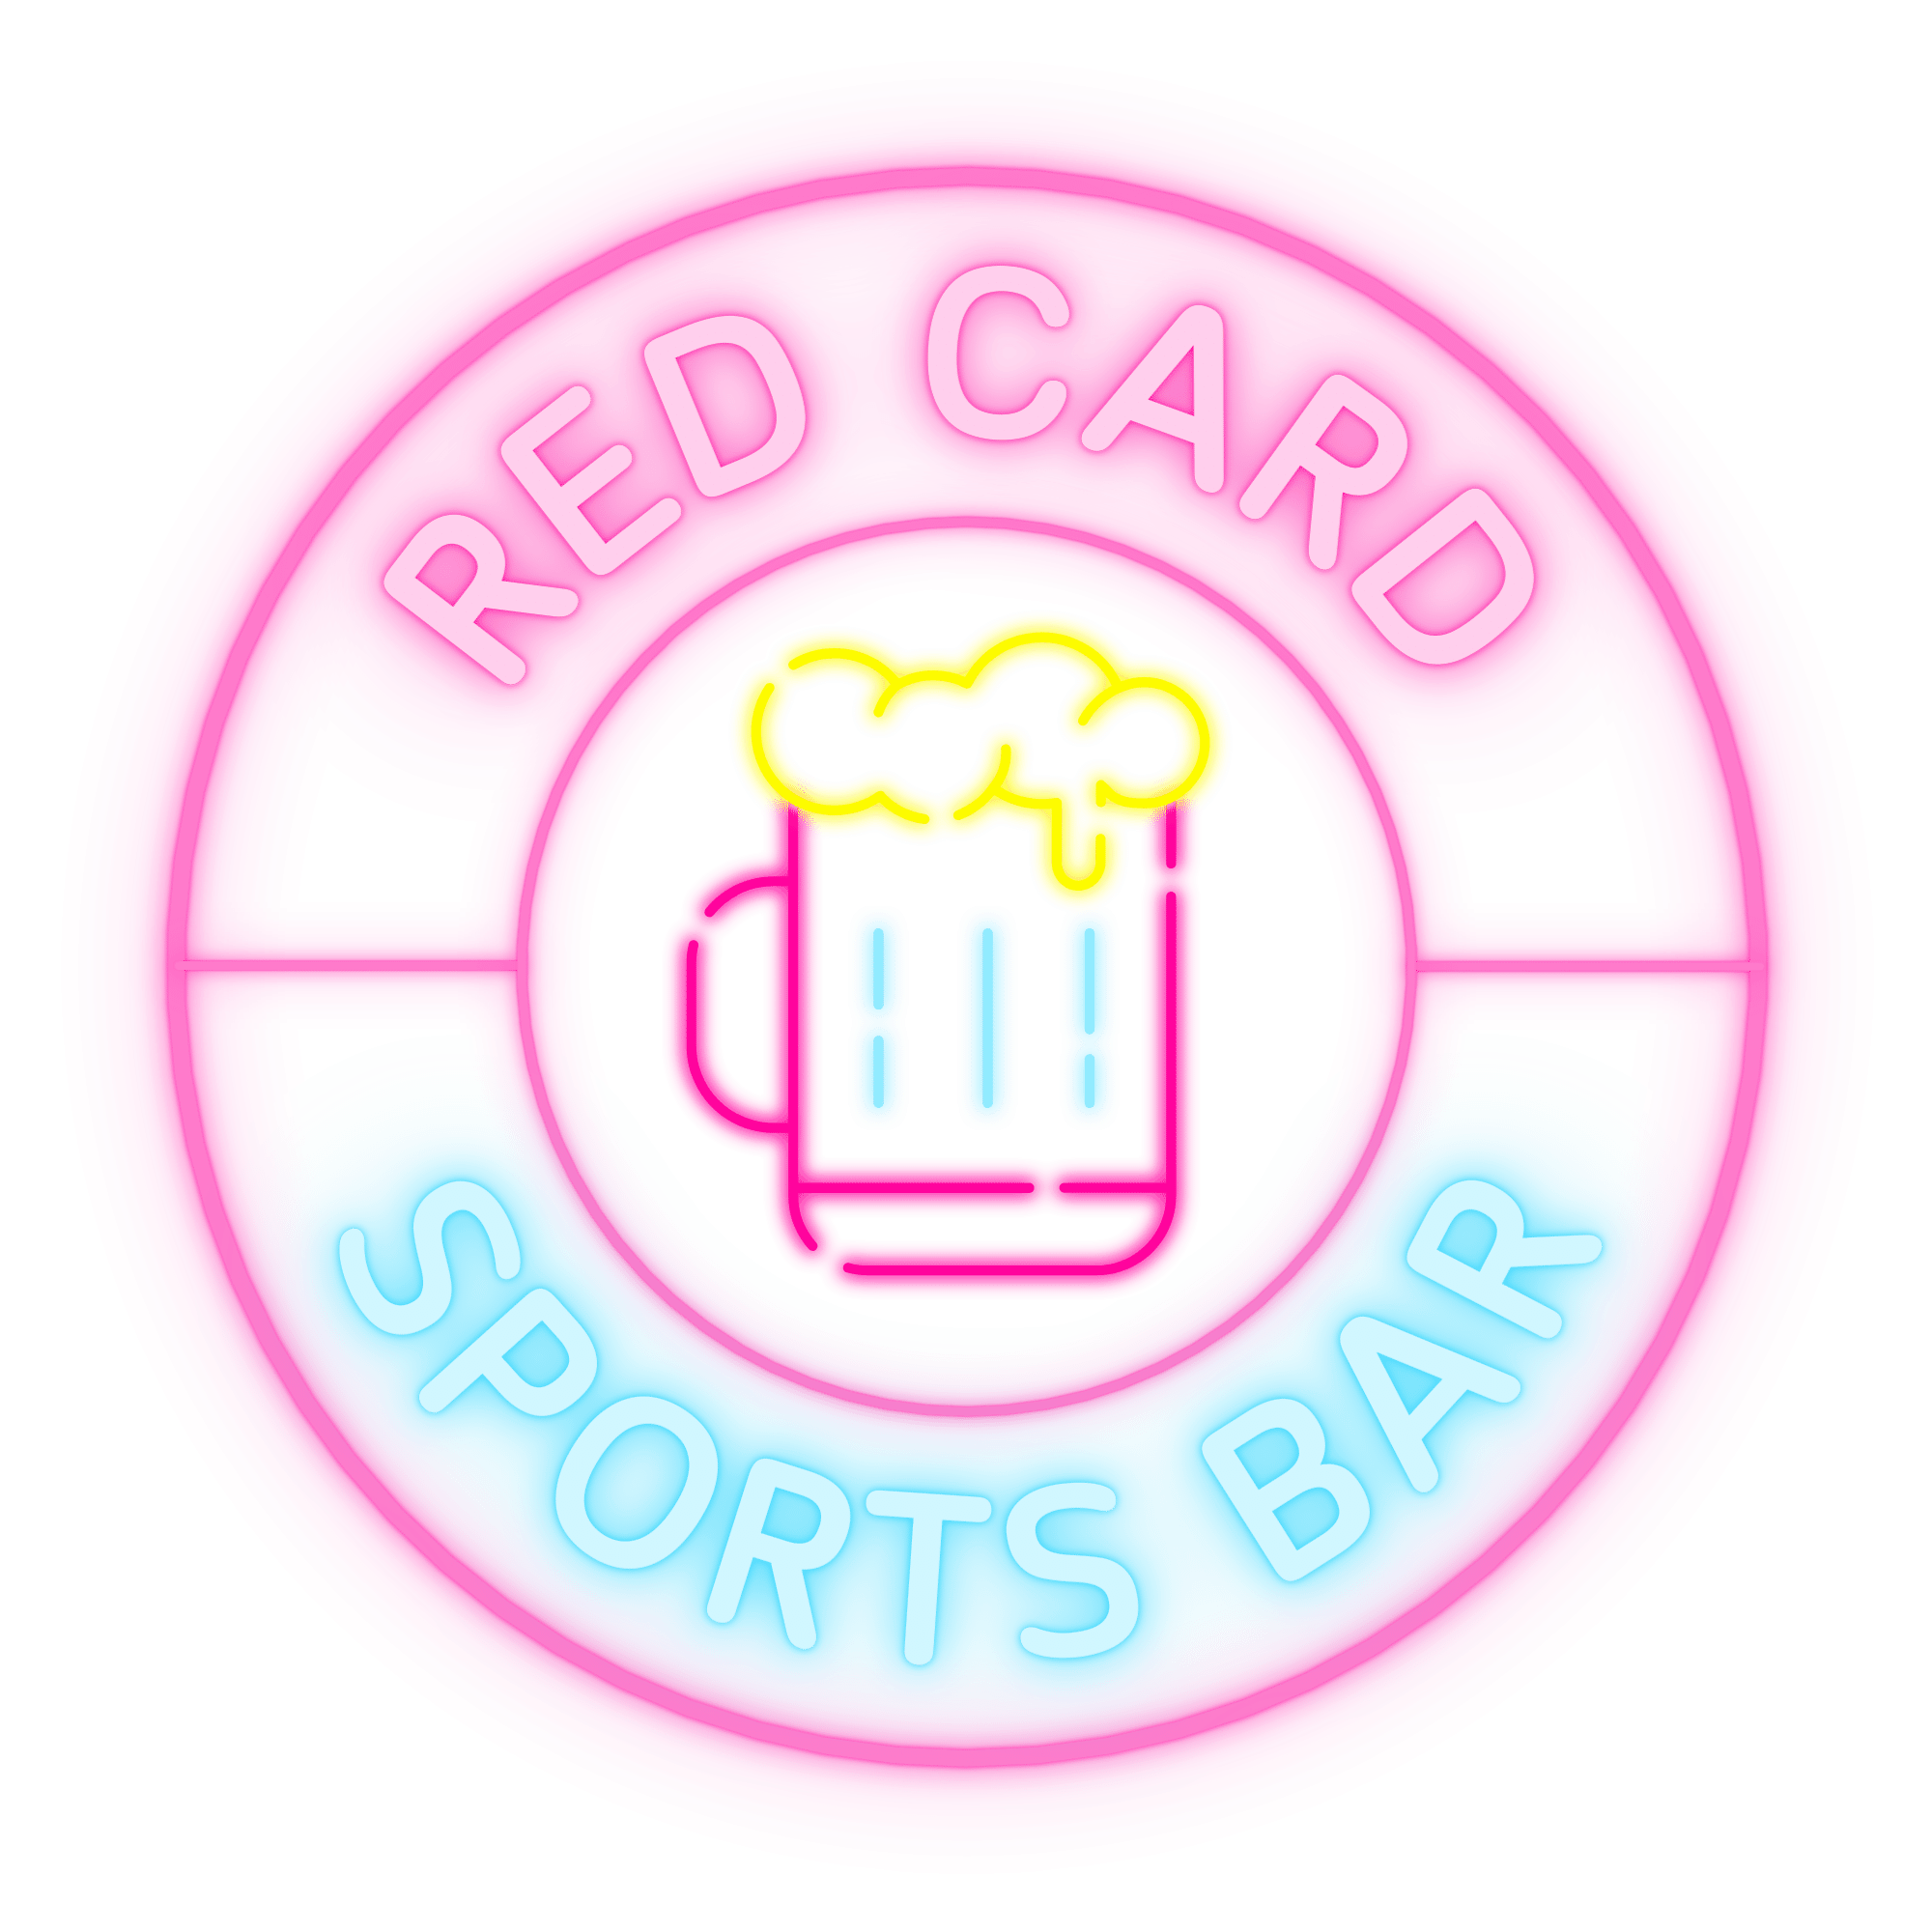 Red Card Thimphu